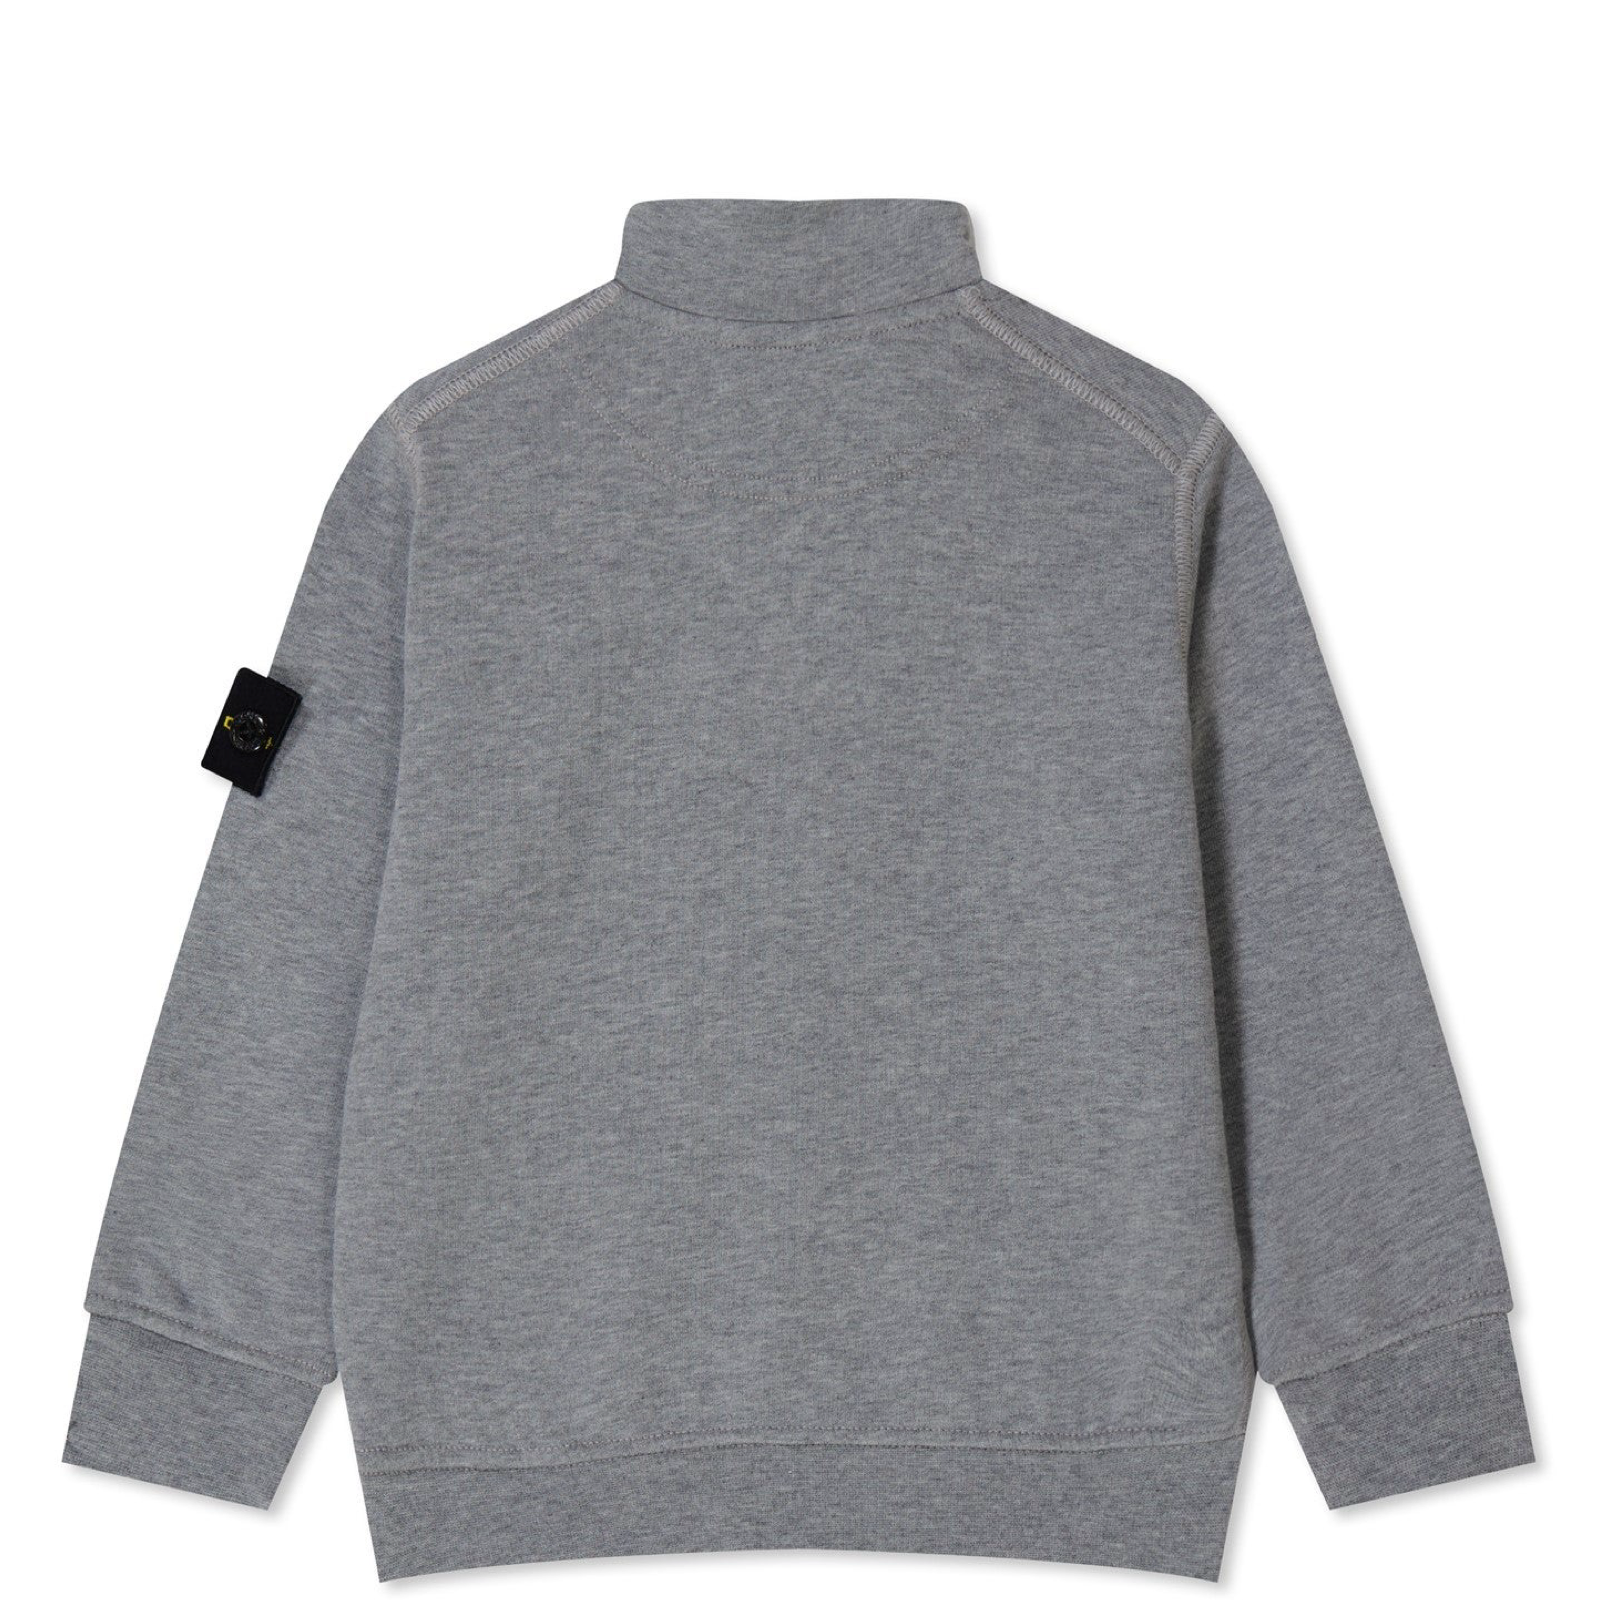 Stone Island Junior Grey 1/4 Zip Sweatshirt - DANYOUNGUK